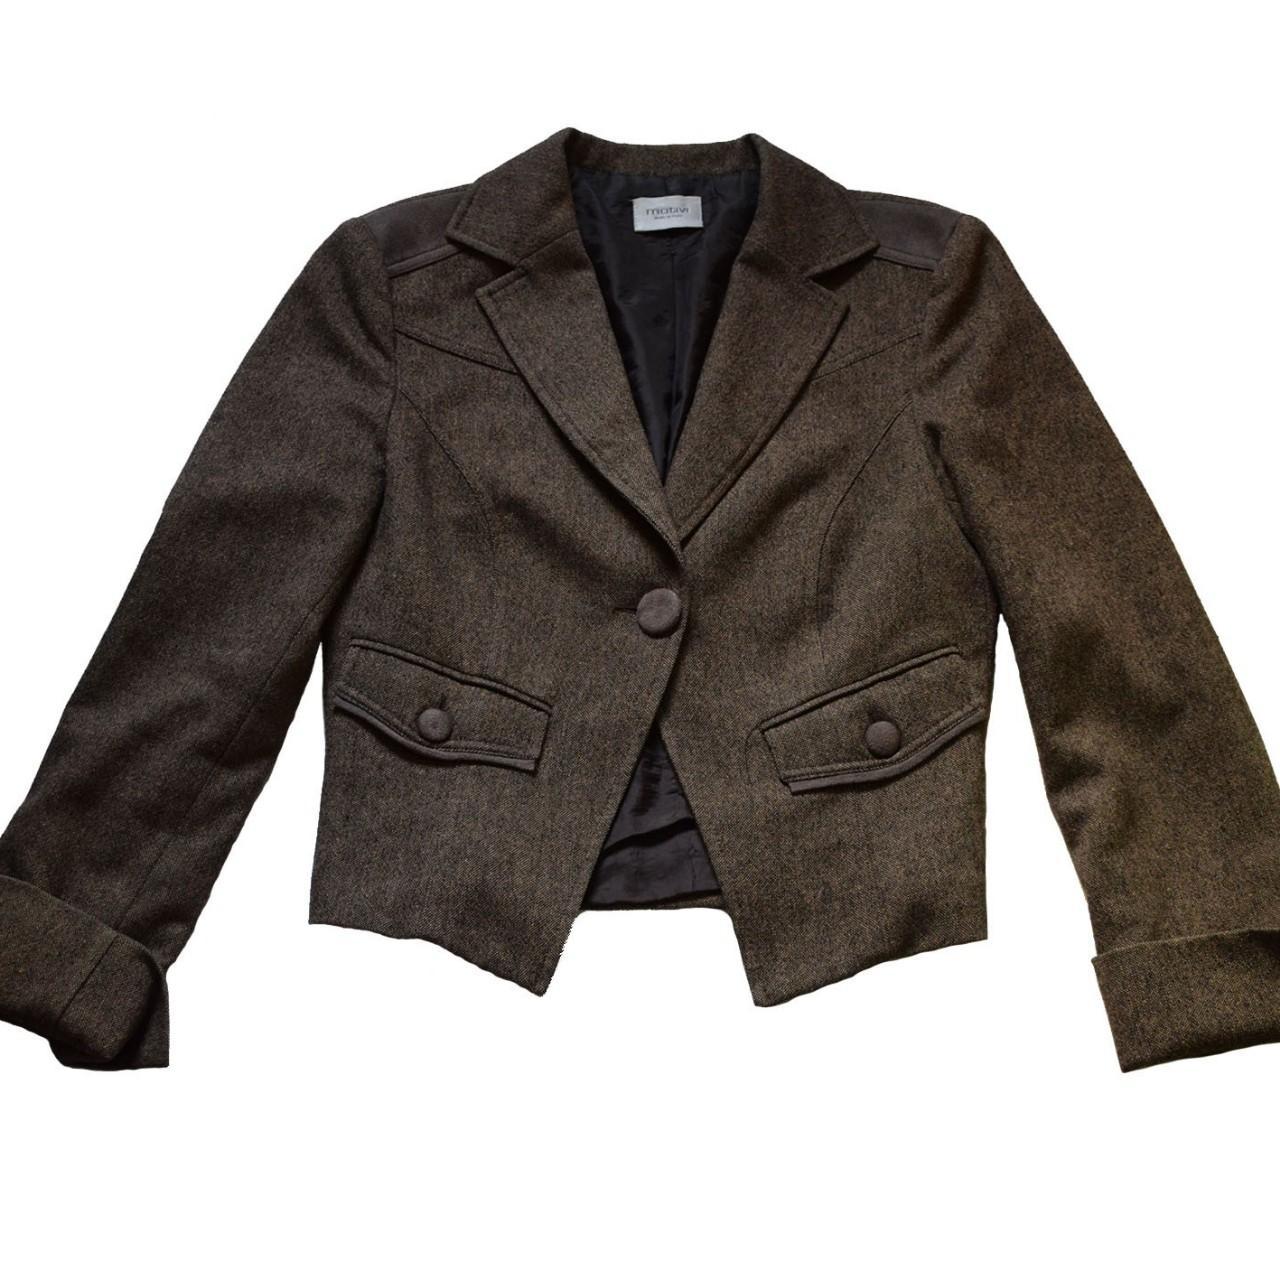 Brown Tweed Blazer Motivi Brand made in Italy UK... - Depop